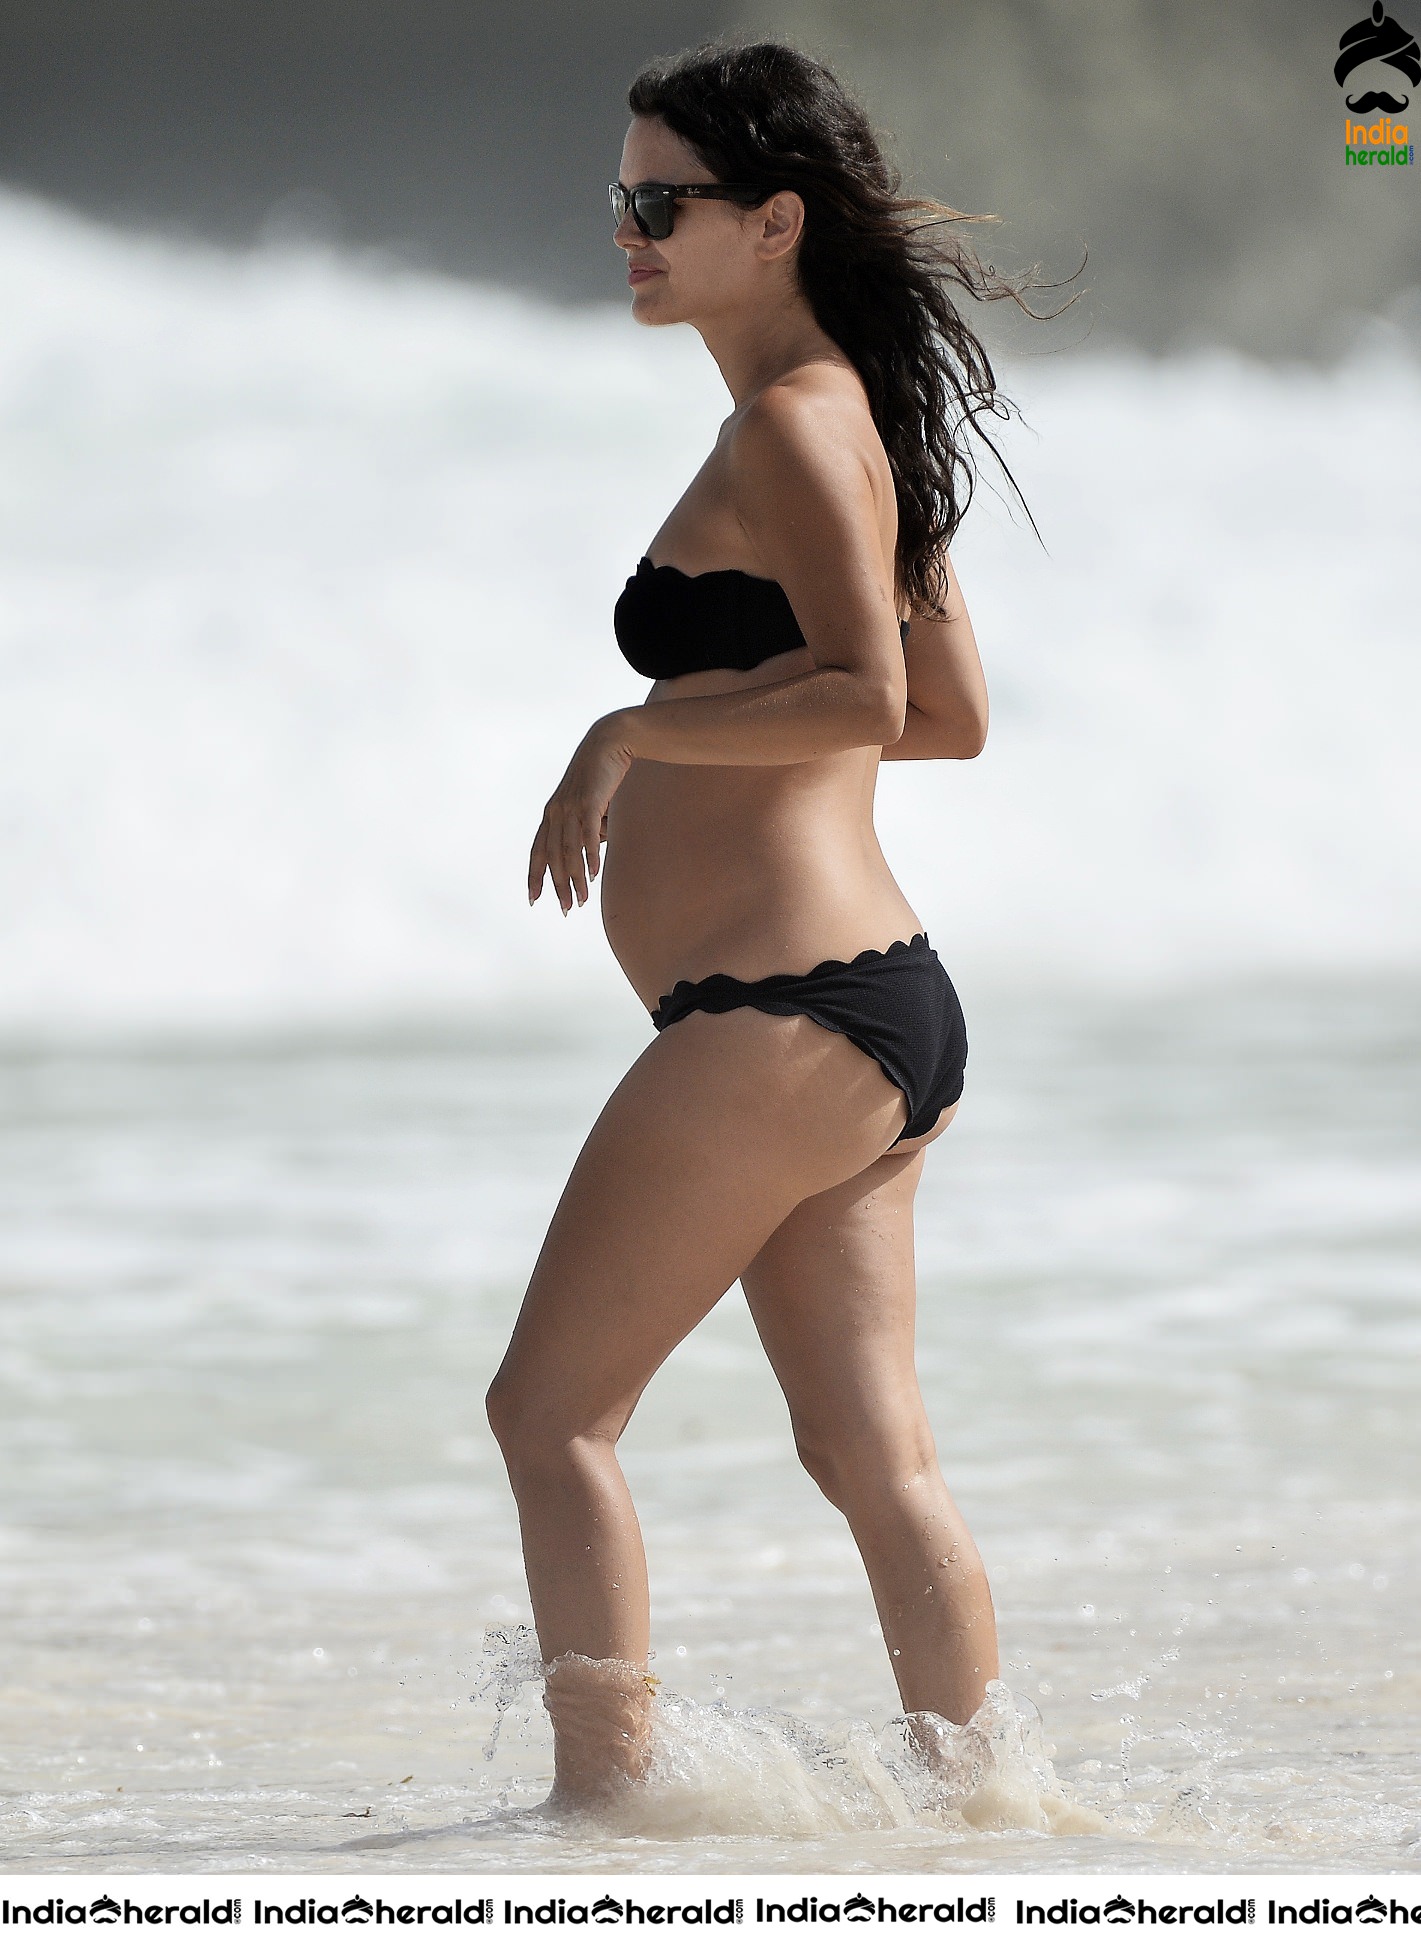 Rachel Bilson wearing a Black Bikini and flaunting her bump at a beach in Barbados Set 1